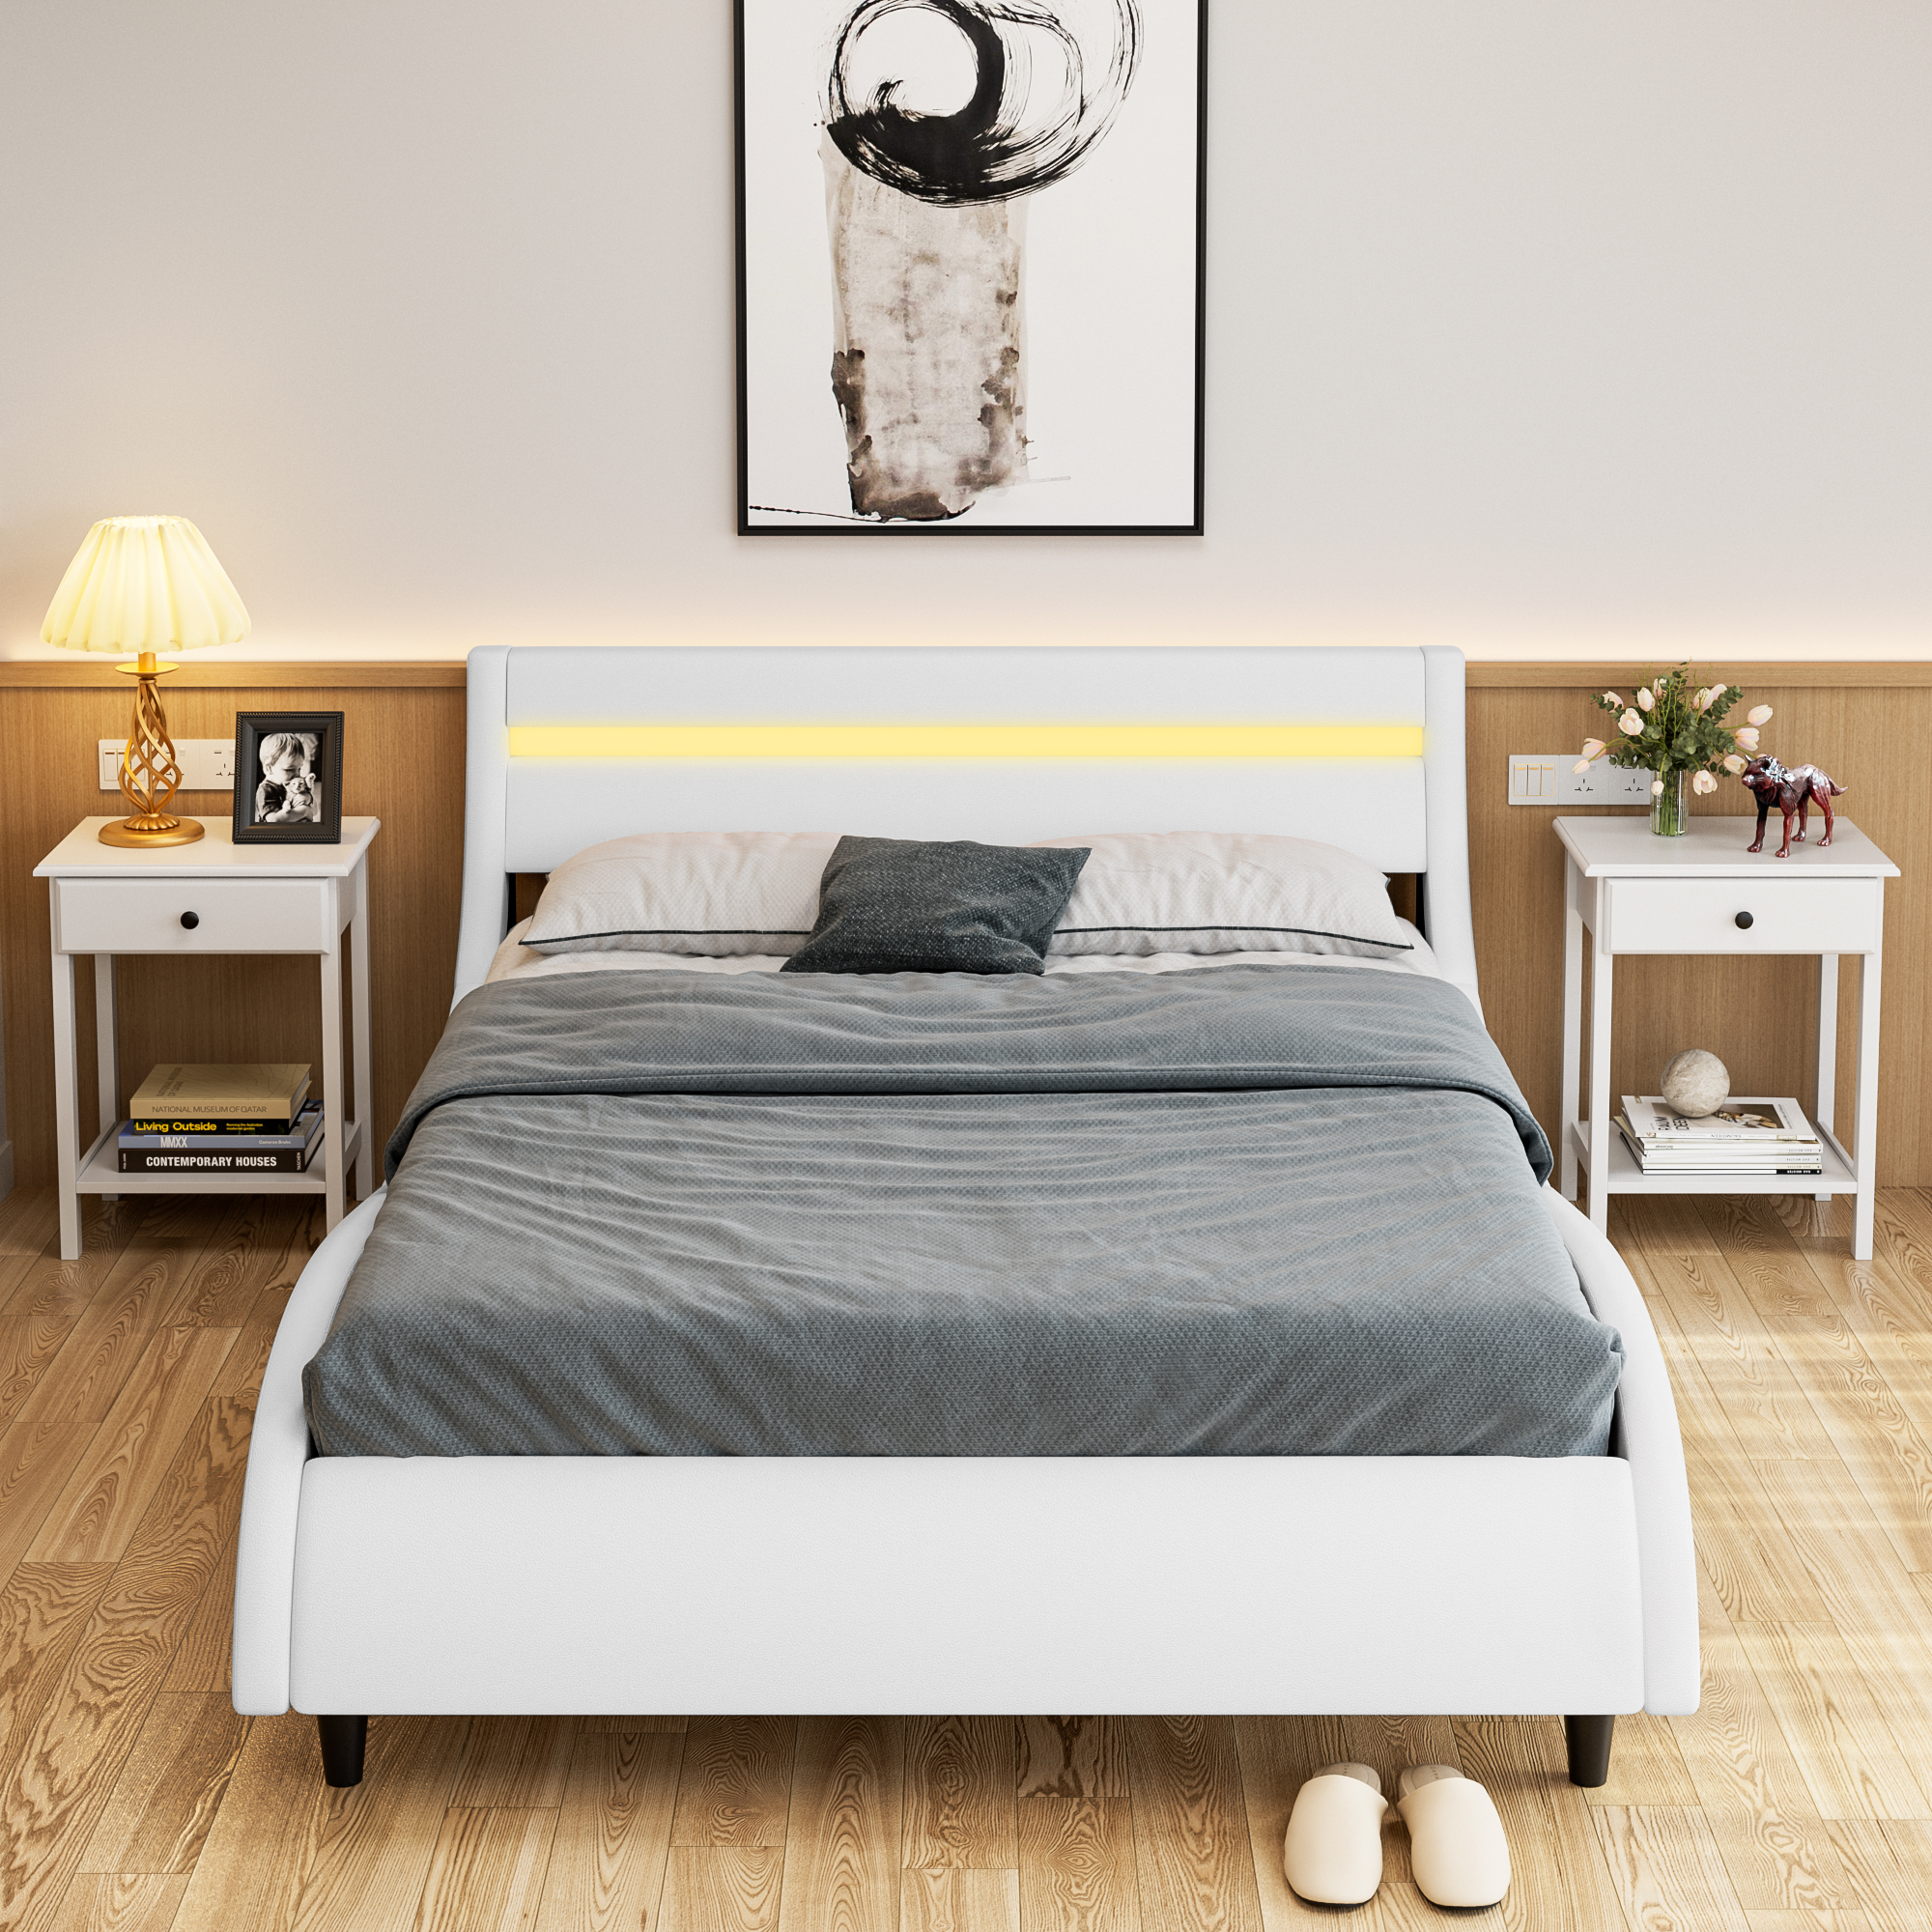 Homfa Full Size Bed Frame, 16 Colors Led Wooden Platform Bed Frame with Adjustable Upholstered Headboard, White - image 4 of 8